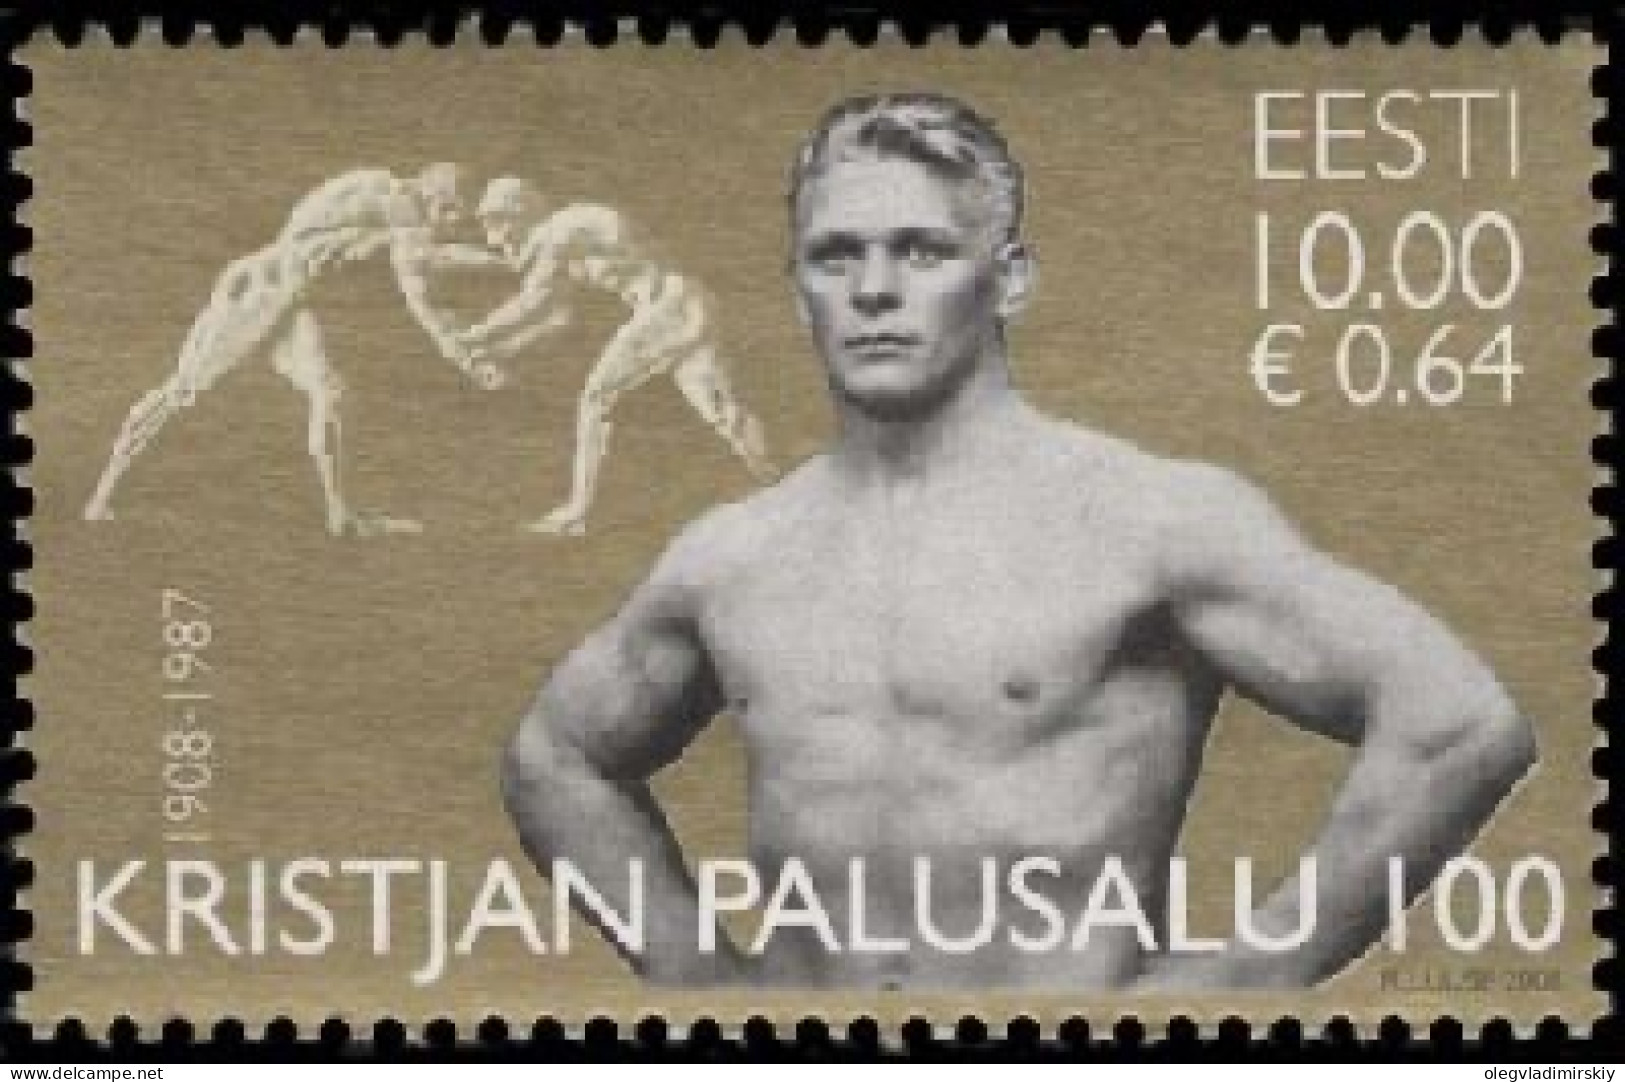 Estonia Estland 2008 Olympic Games Berlin 1936 Kristjan Palusalu Twice Champion Stamp Mint - Sommer 1936: Berlin